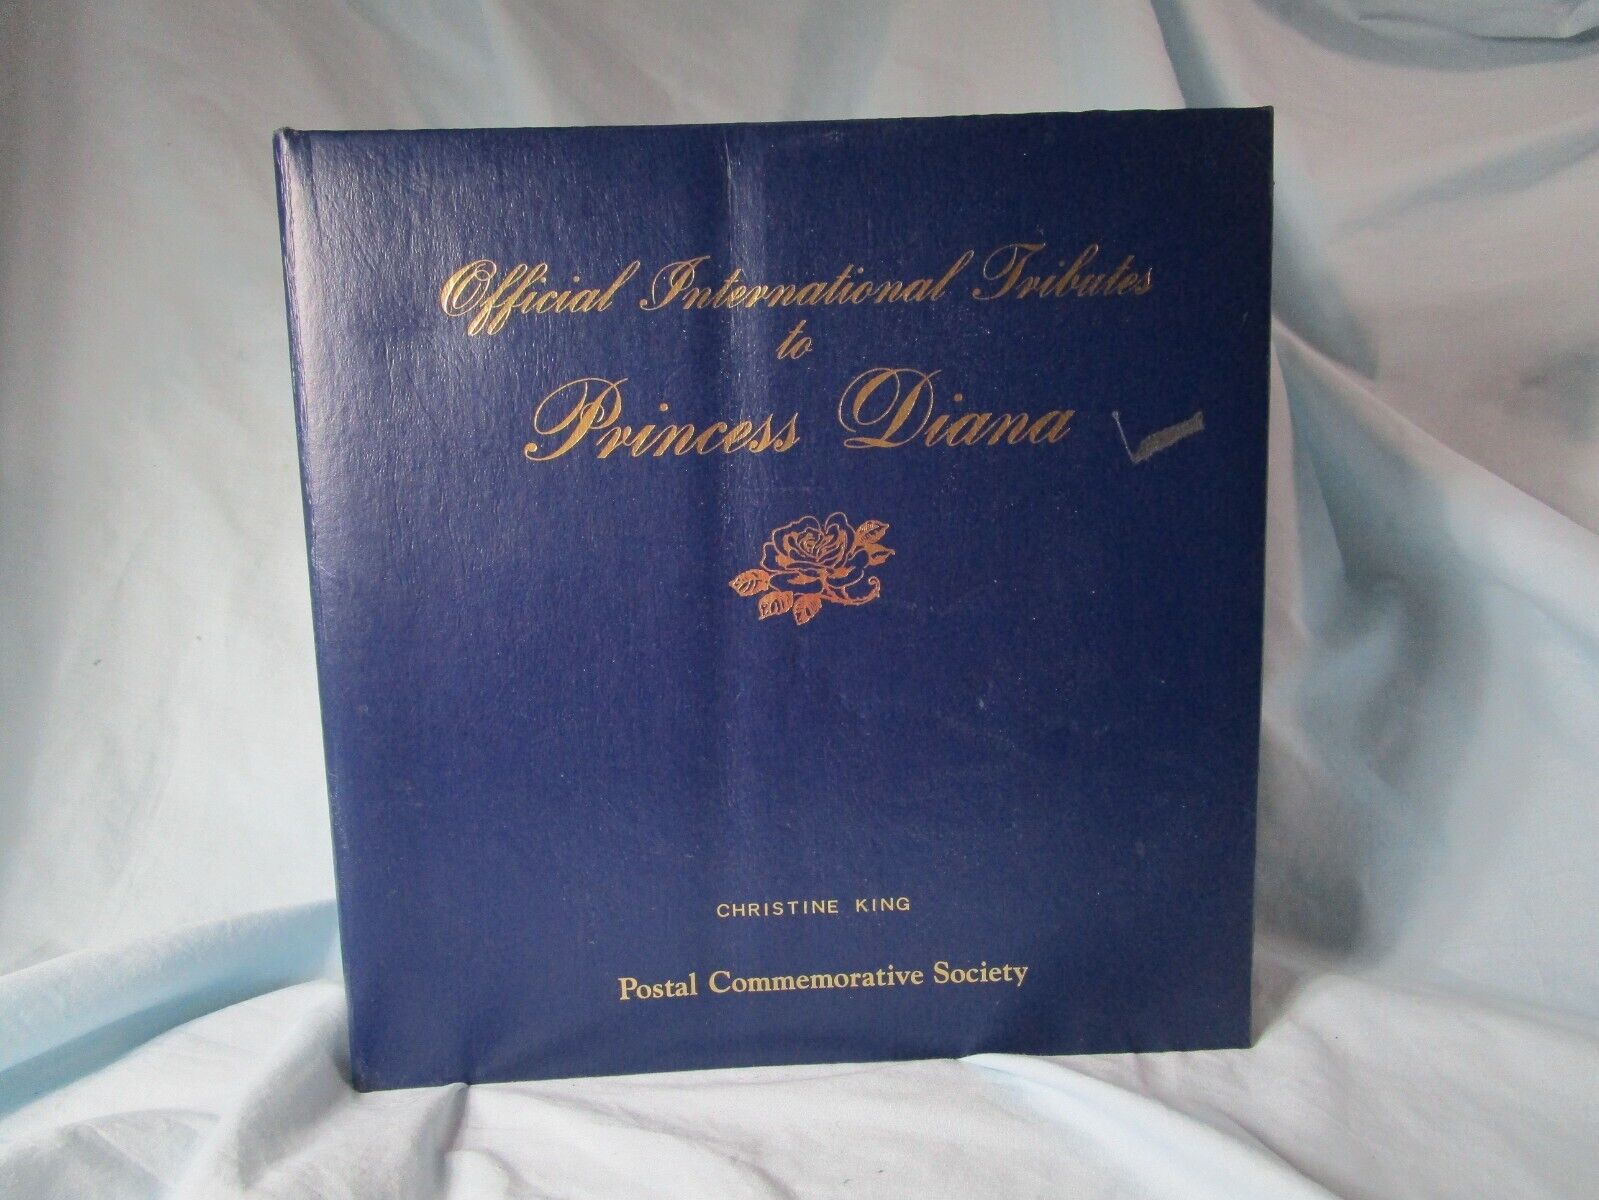 Official International Tributes to Princess Diana/Postal Commemorative Society*